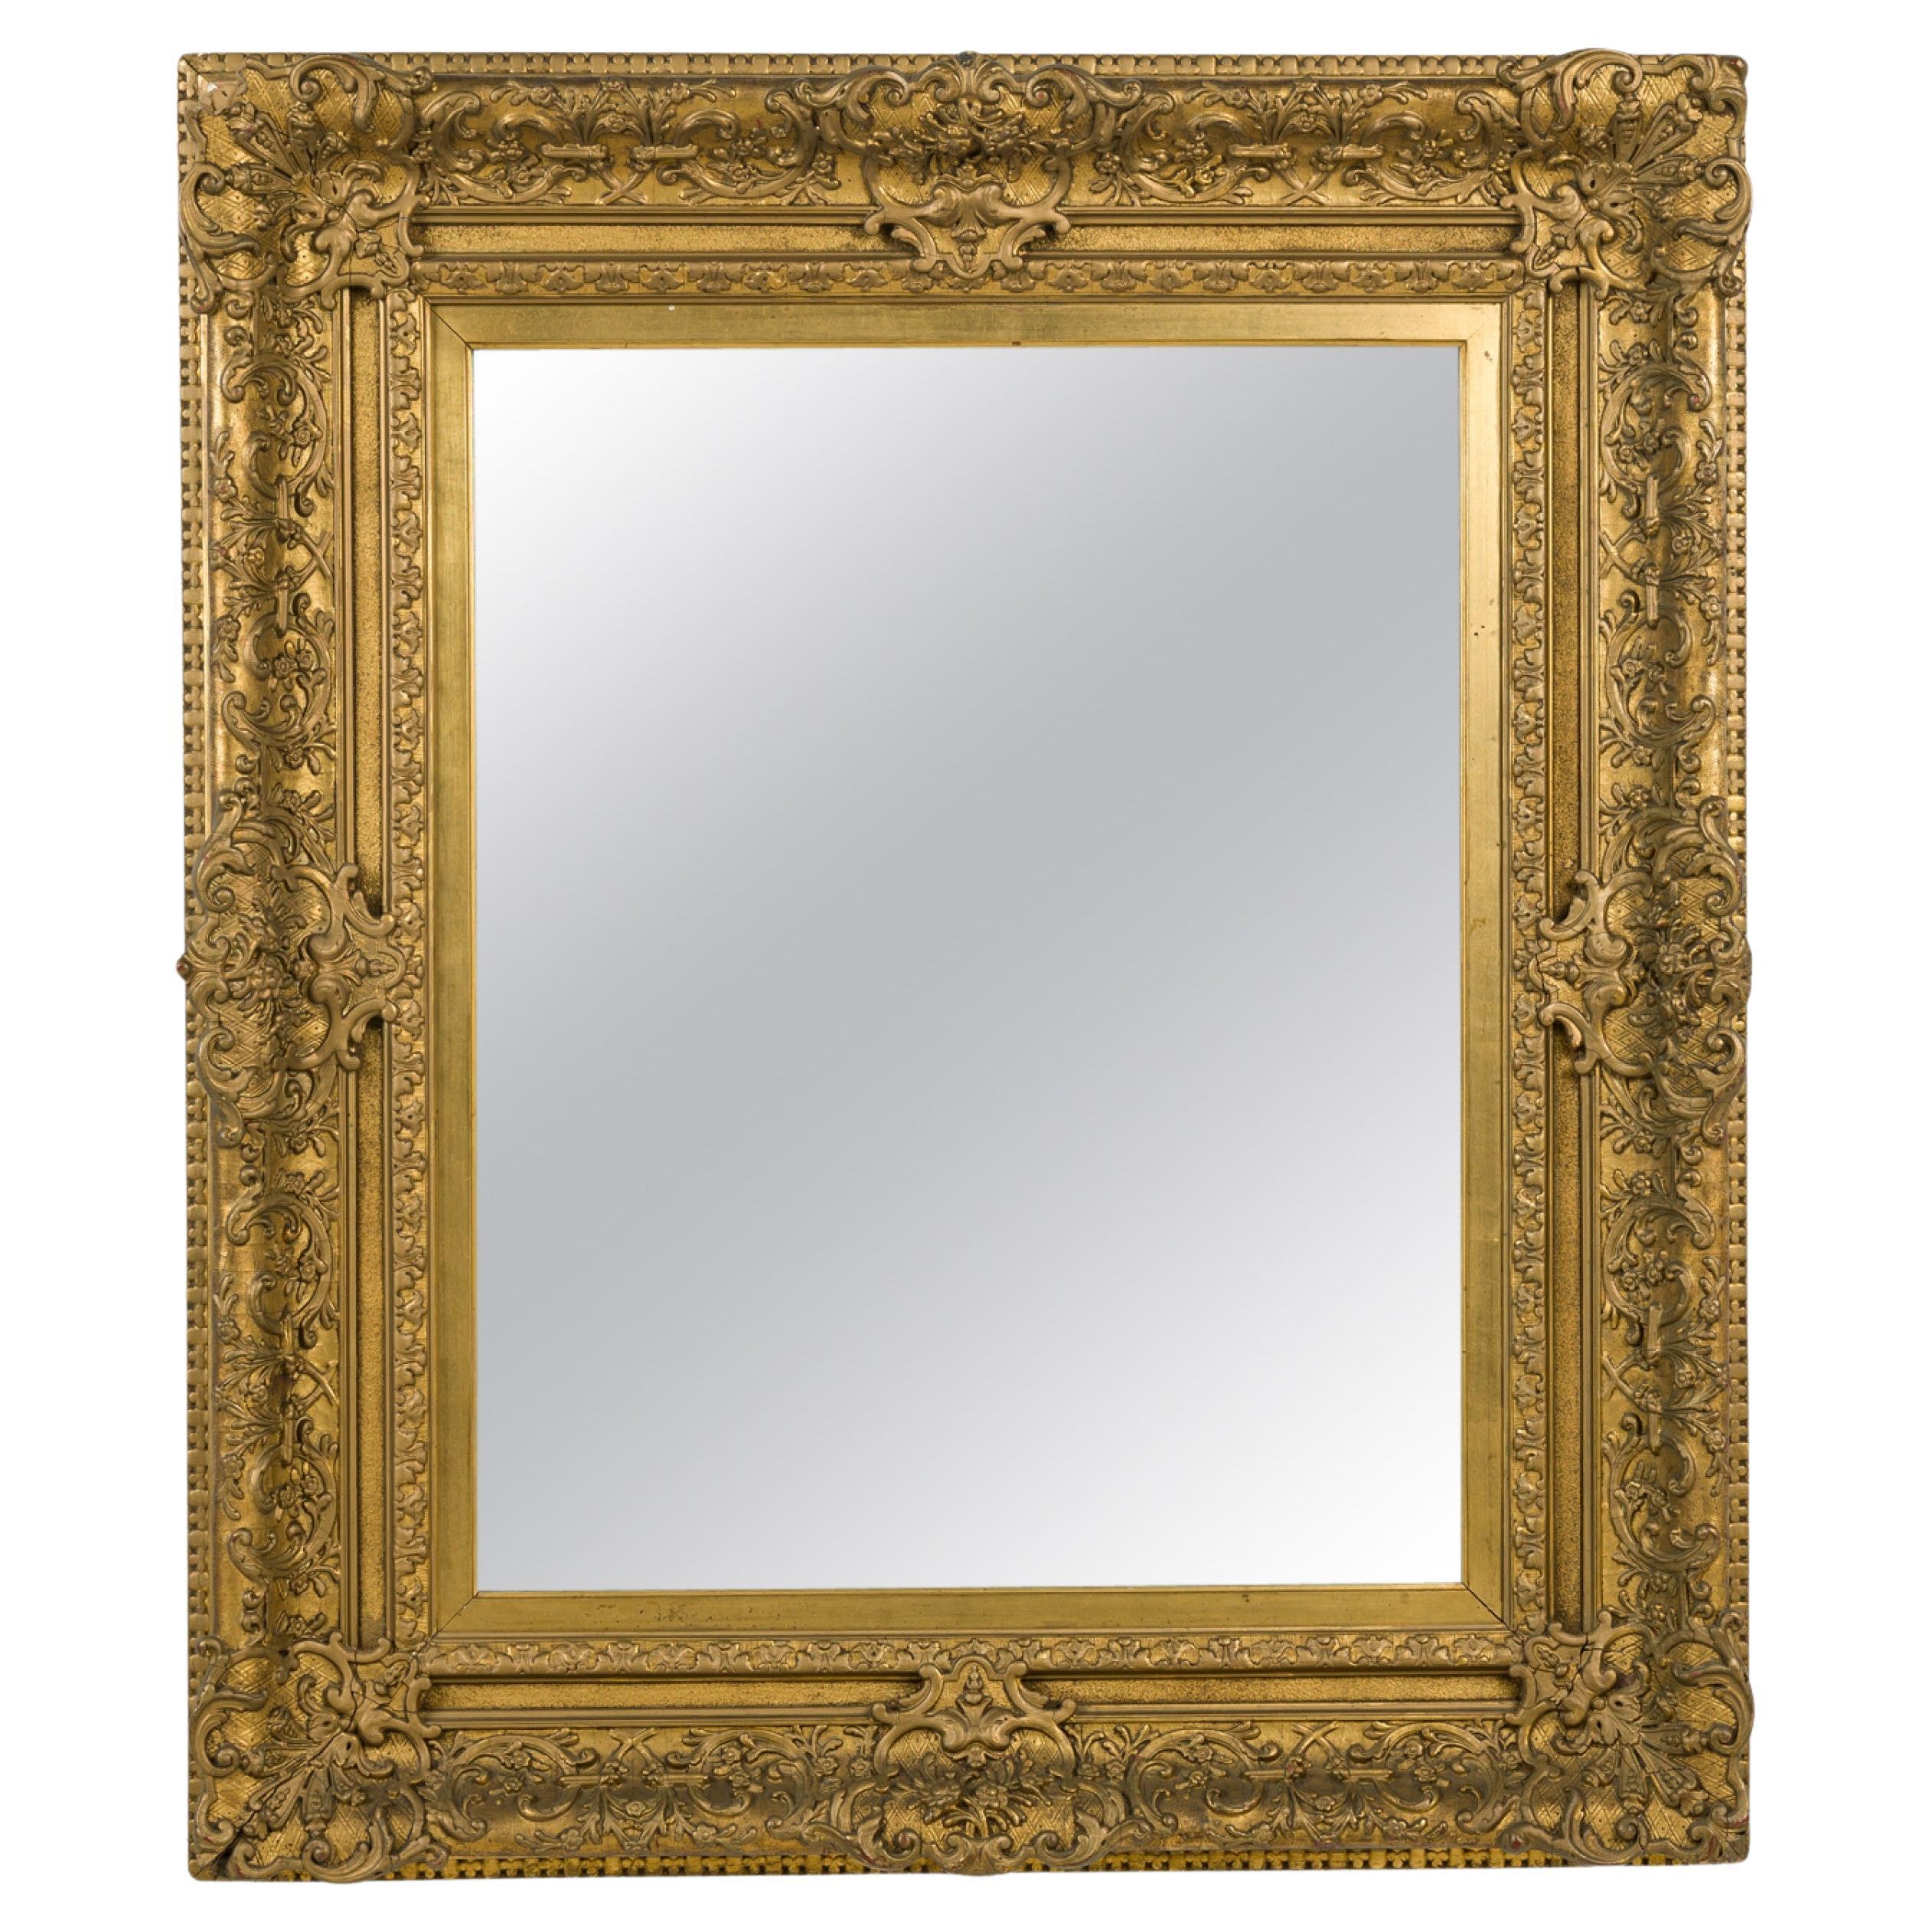 French Louis XV Giltwood Mirror